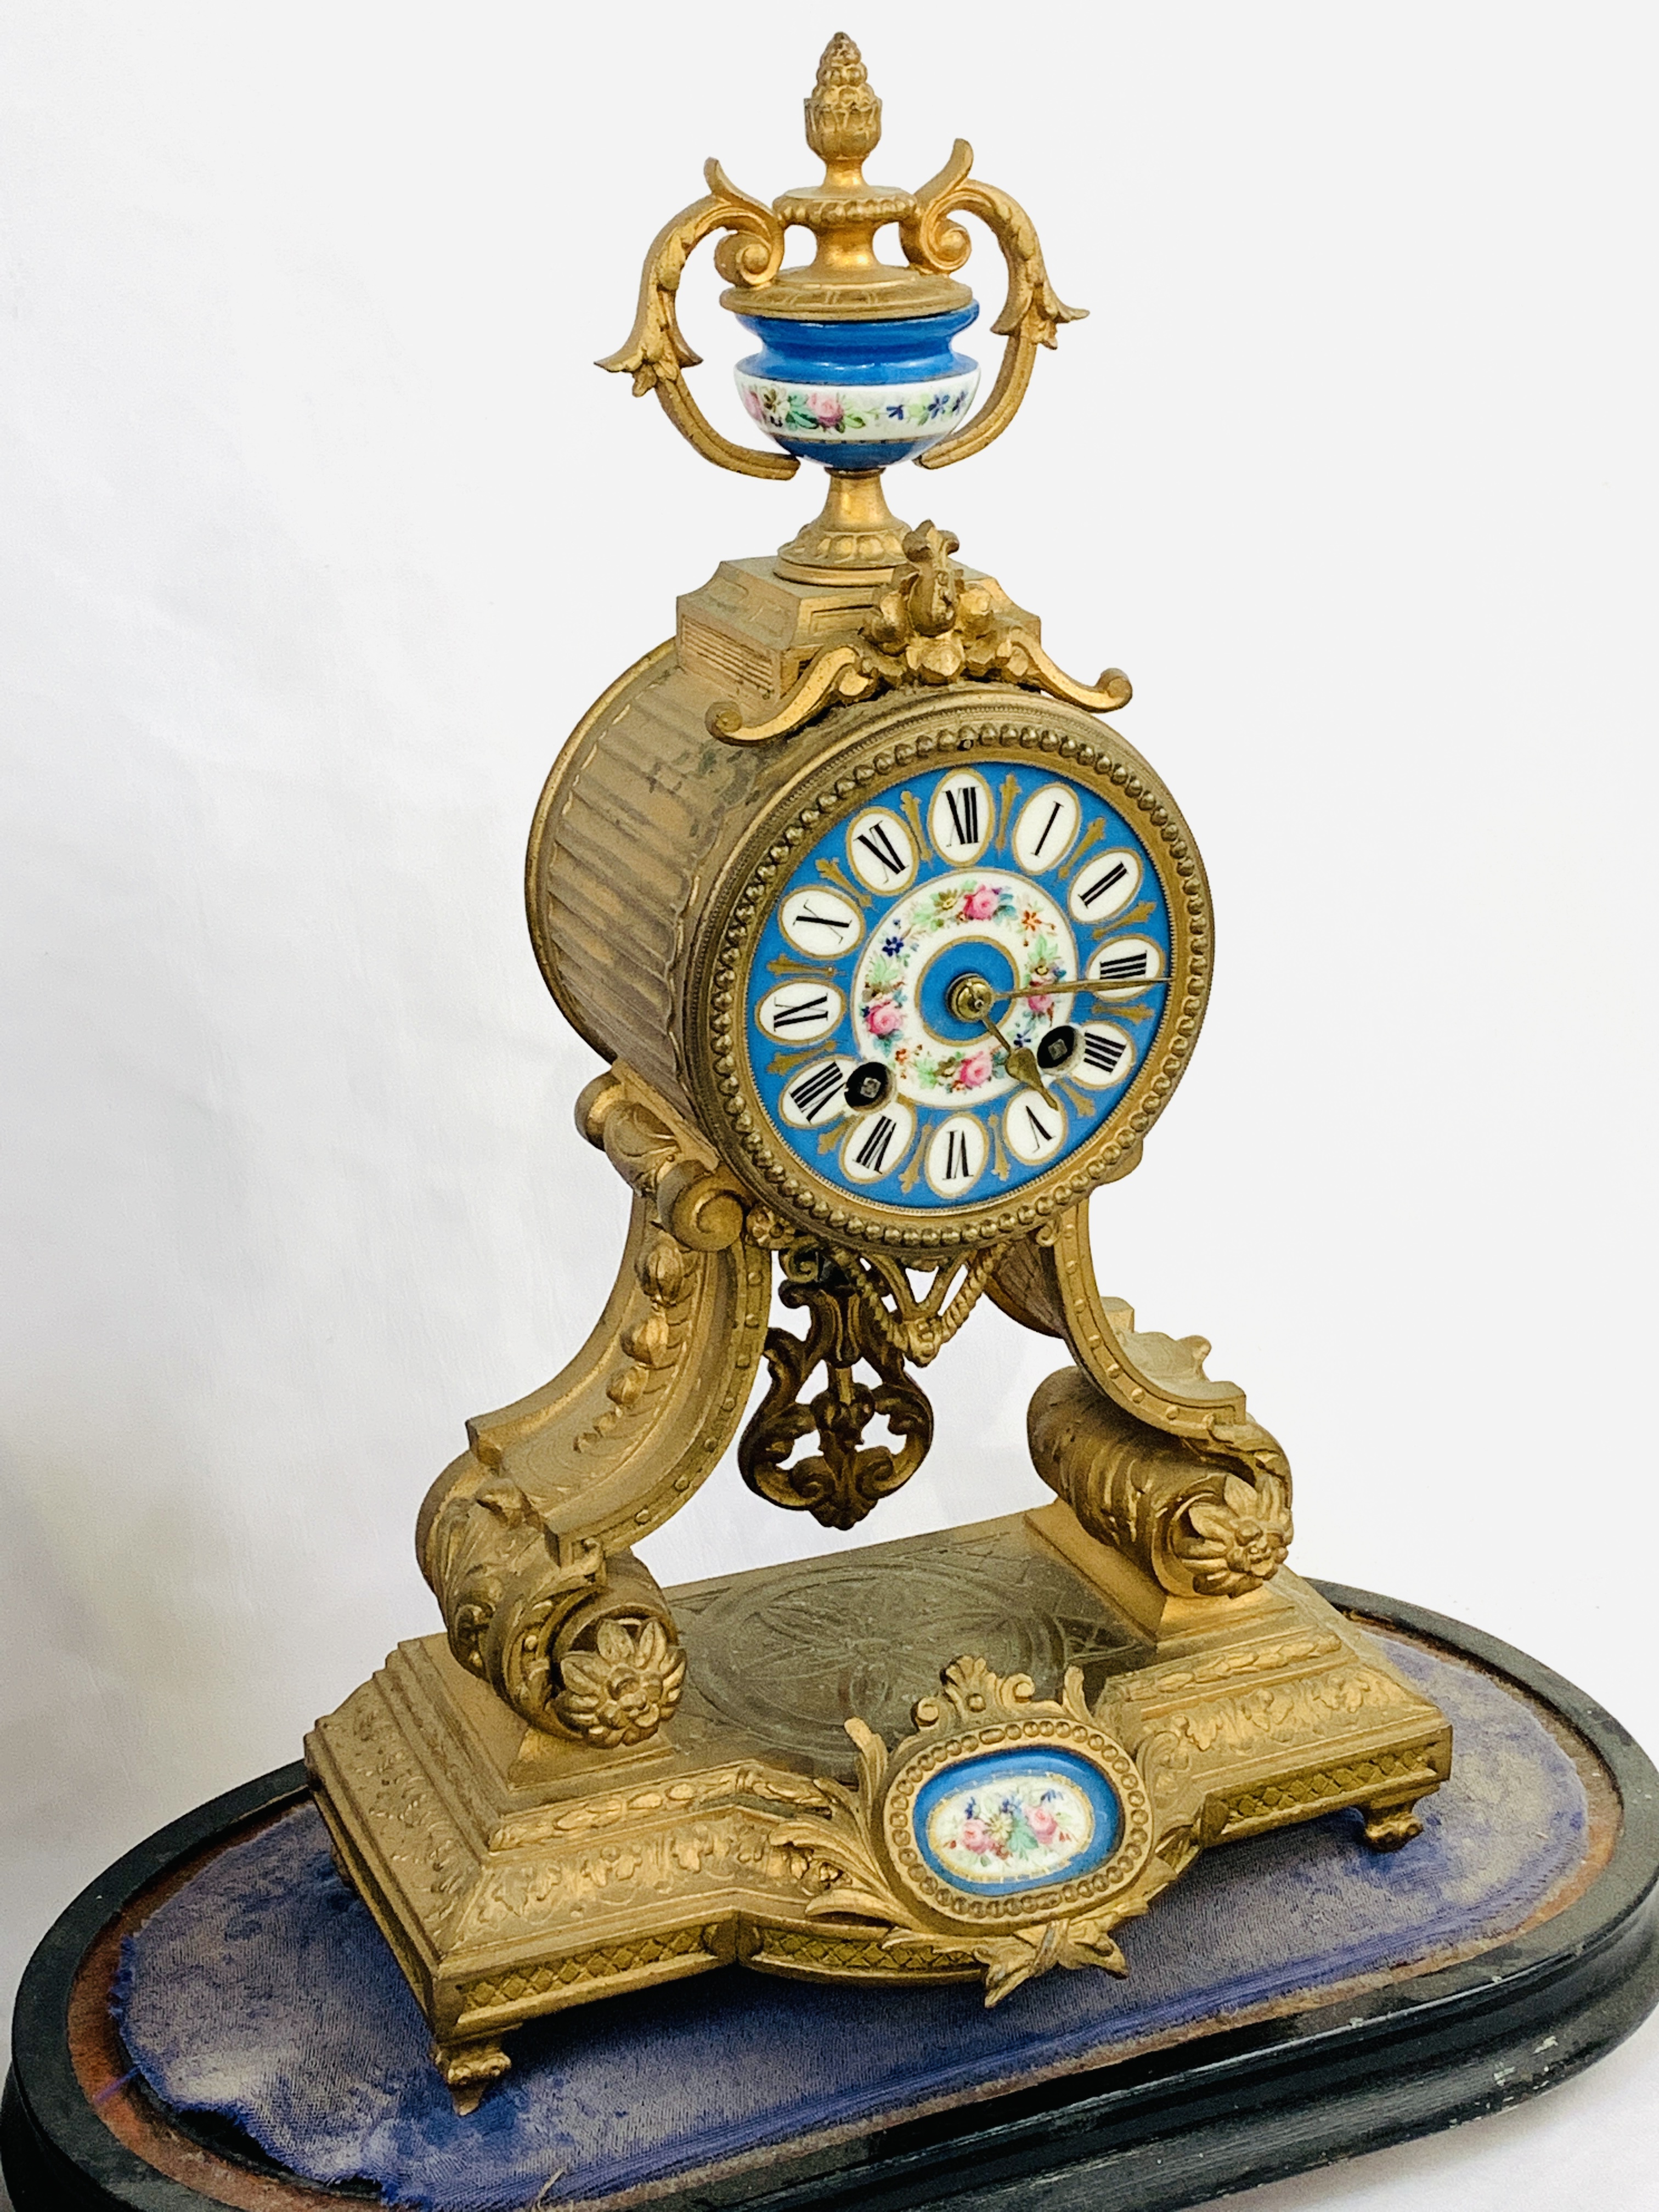 Mahogany mantel clock together with an ormolu mantel clock - Image 4 of 4